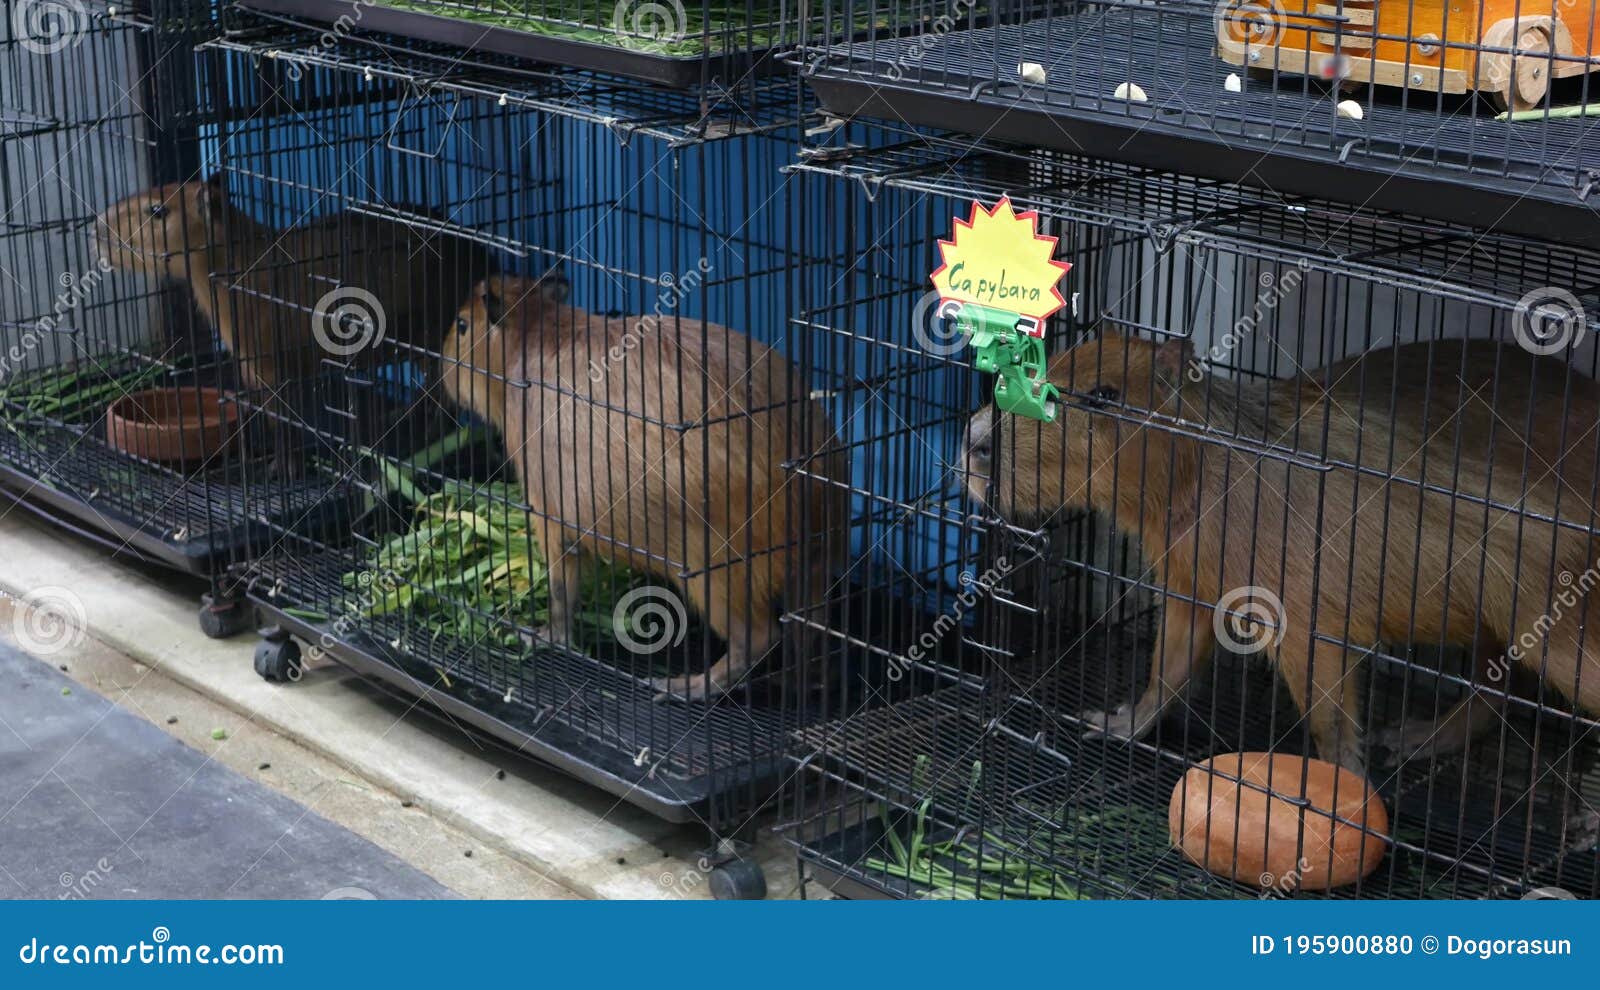 Capybaras in Small Cages on Market. Adorable Capybaras Trapped in Small  Cages in Pet Section of Chatuchak Market in Bangkok, Stock Photo - Image of  bangkok, retail: 195900880